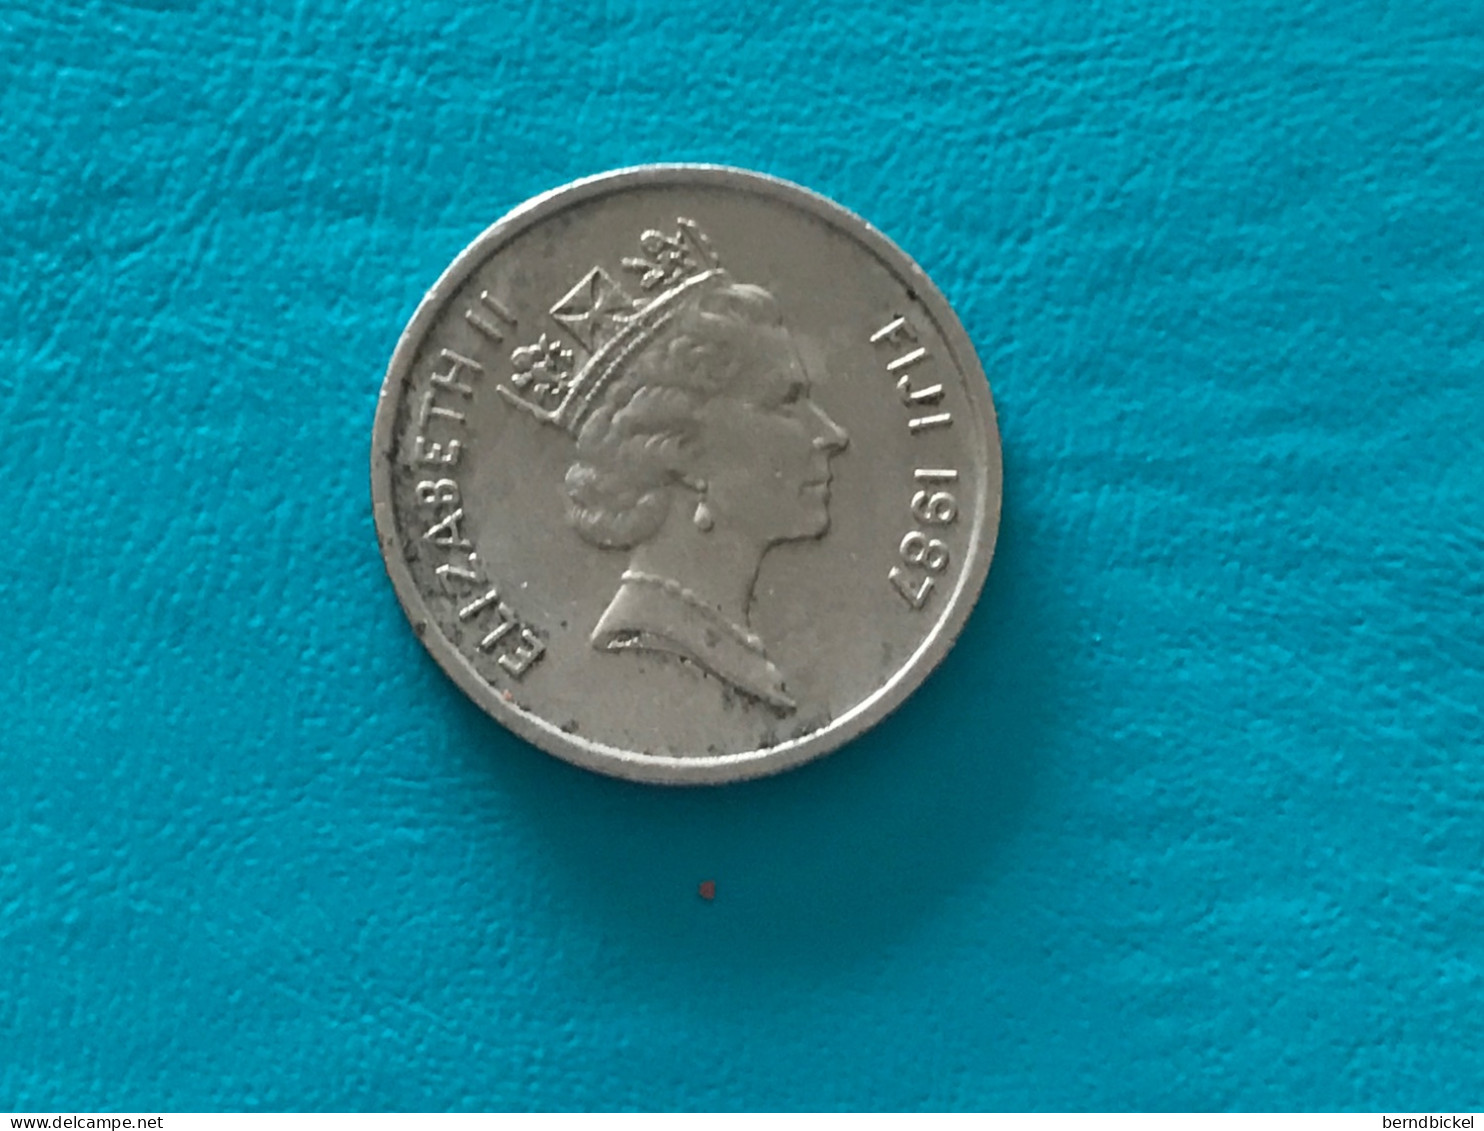 Münze Münzen Umlaufmünze Fiji 5 Cent 1987 - Fiji